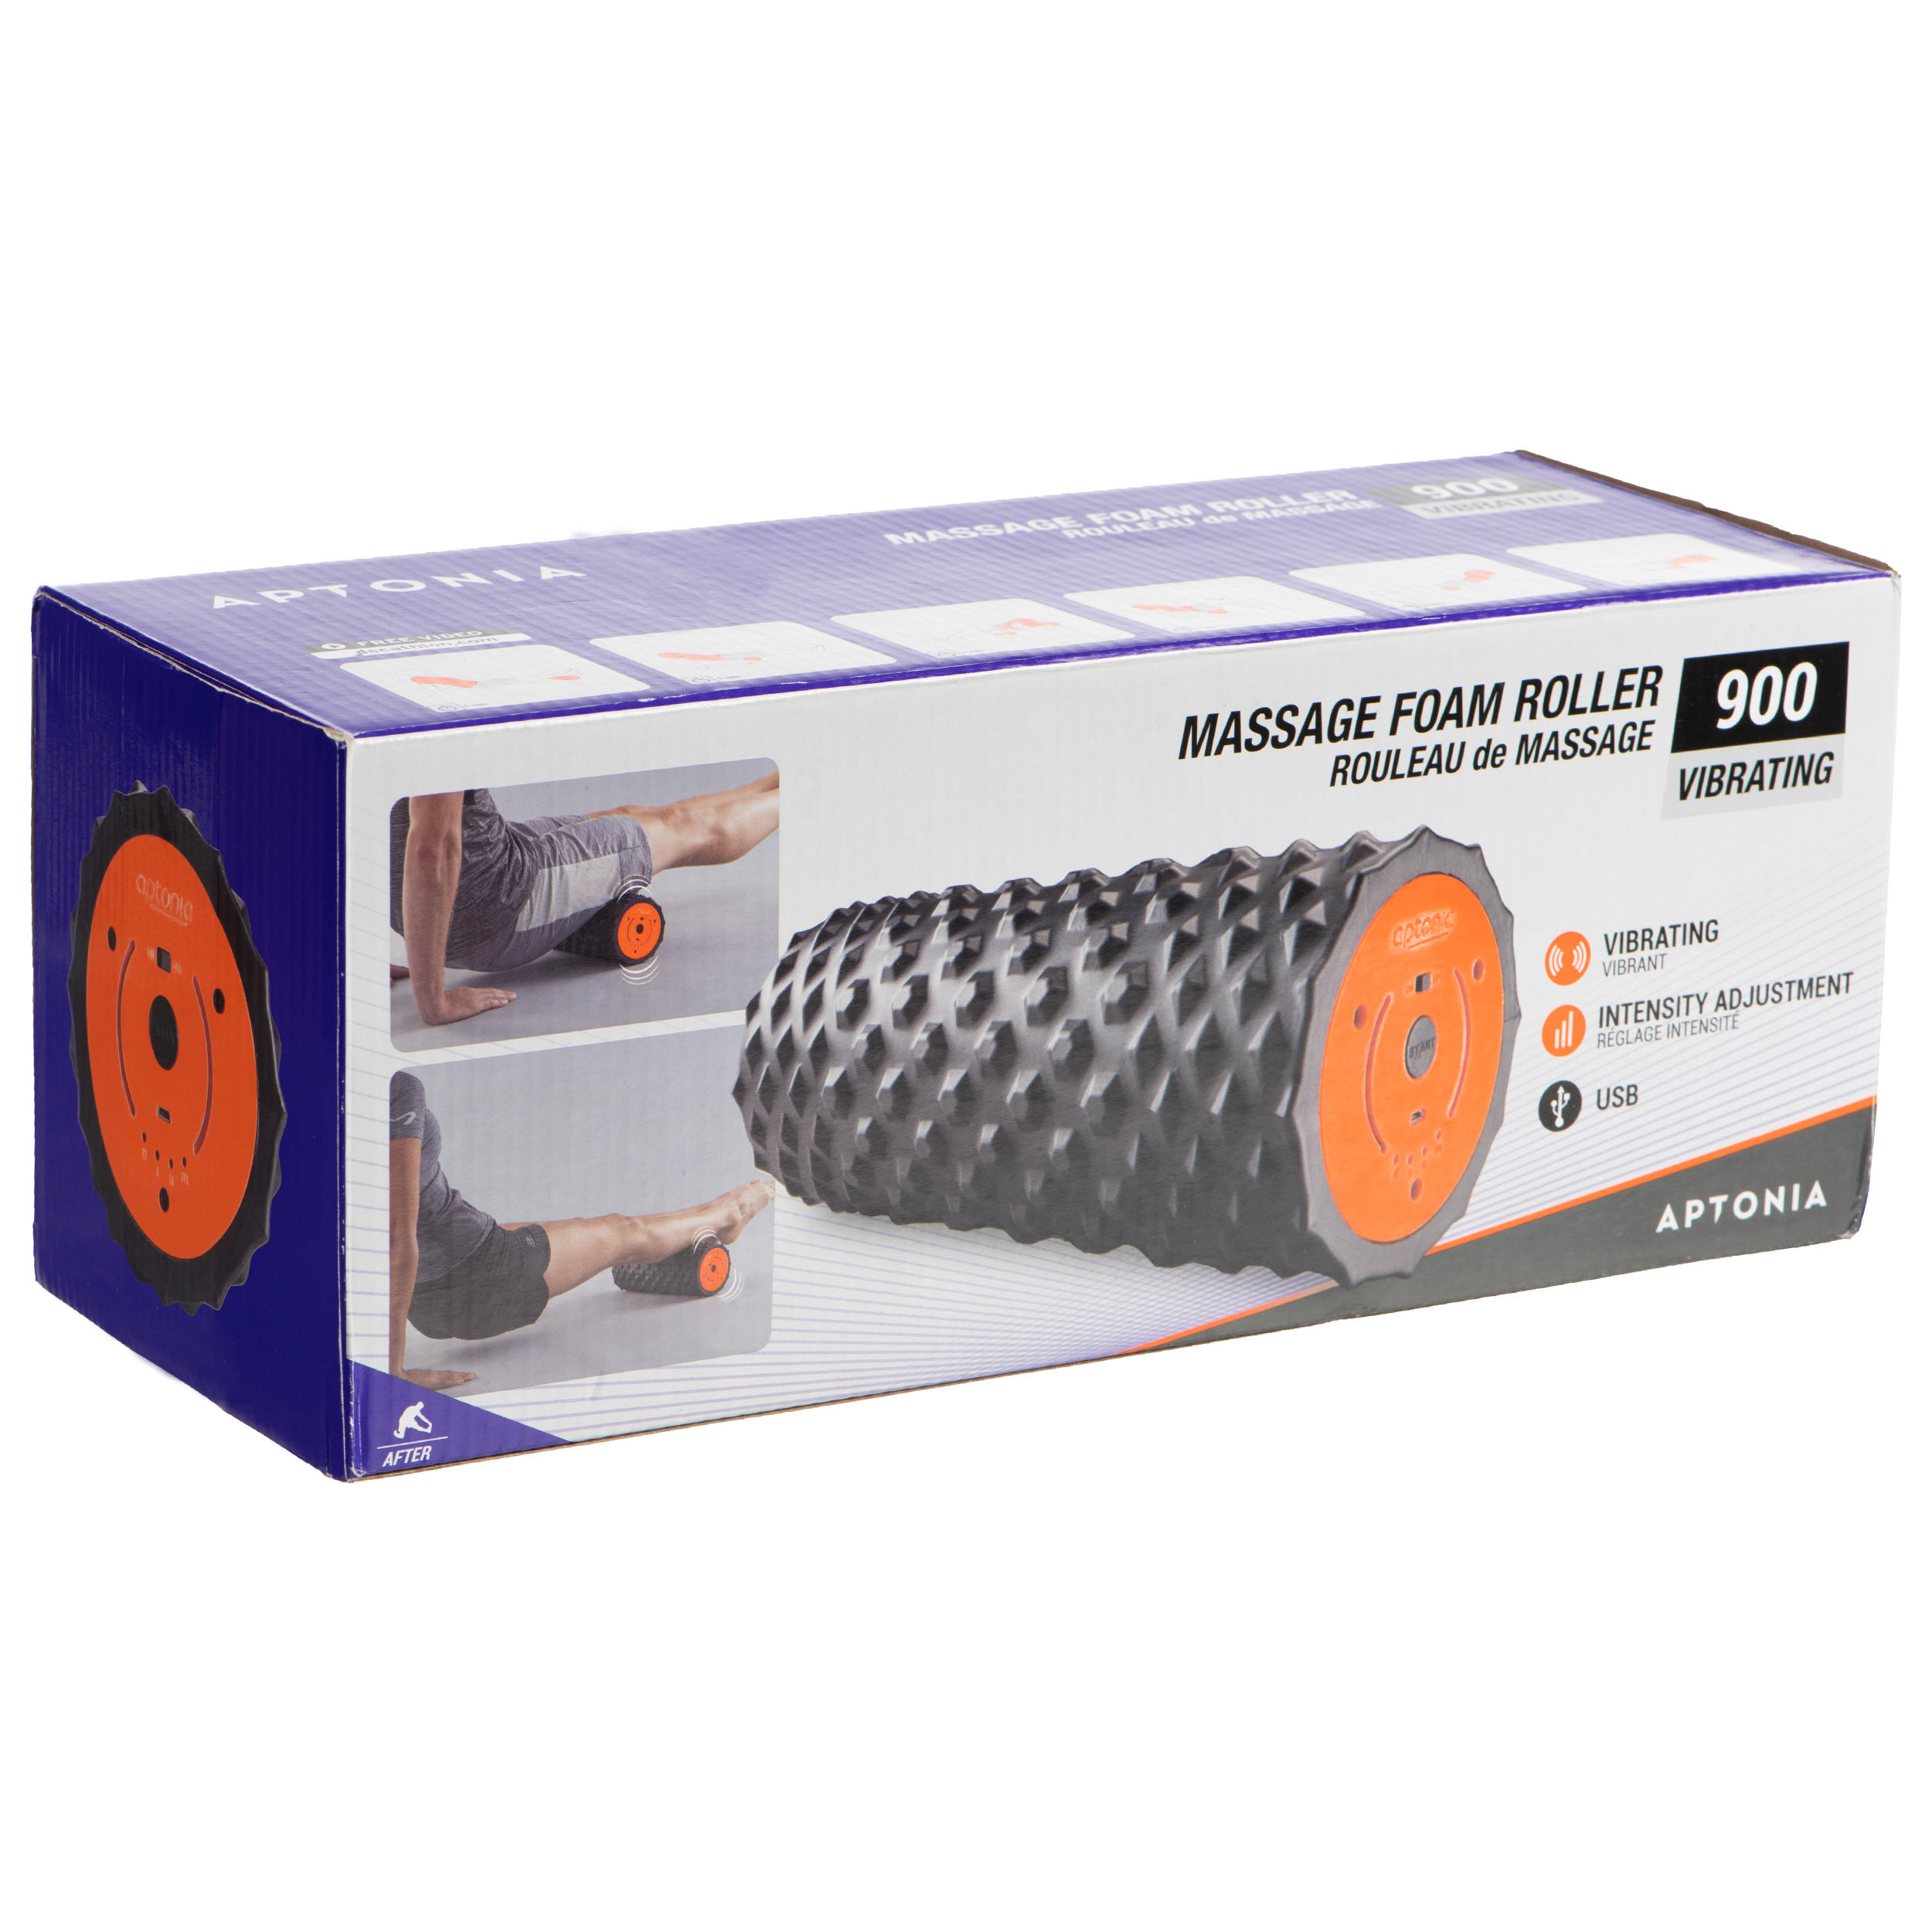 decathlon massage foam roller